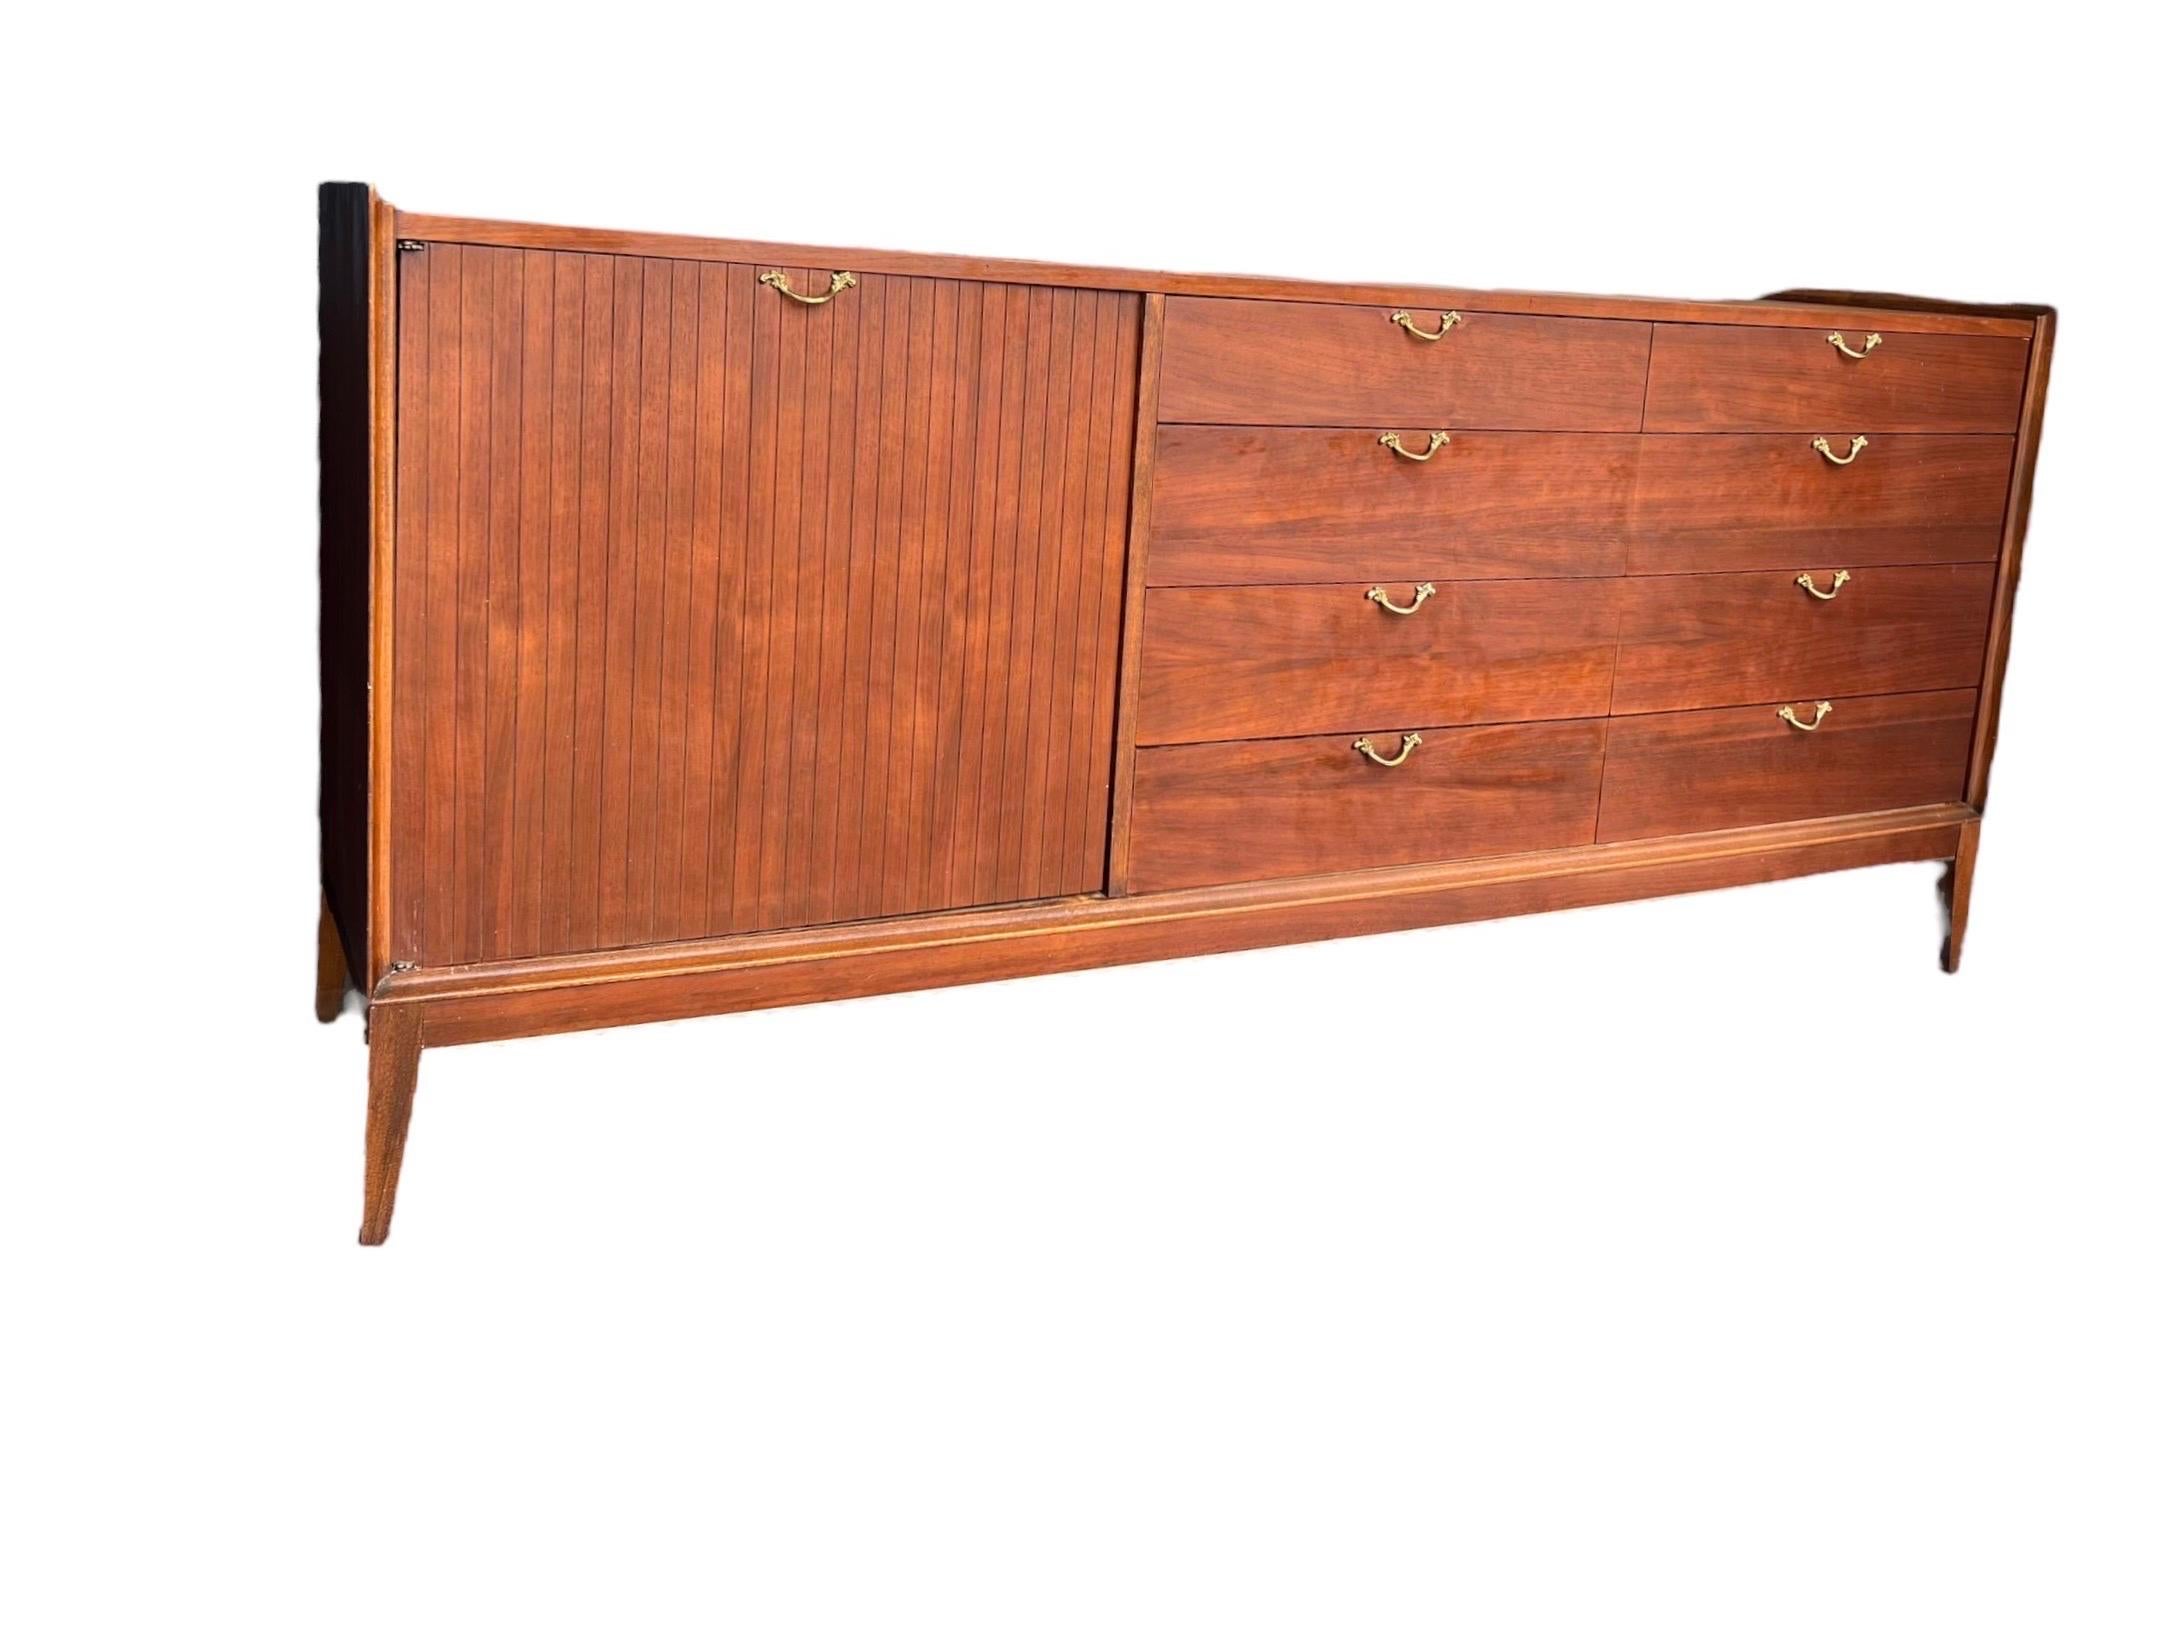 Vintage Mid-Century Modern 12 drawer dresser dovetail drawers

Dimensions. 72 W ; 18 D ; 32.5 H.